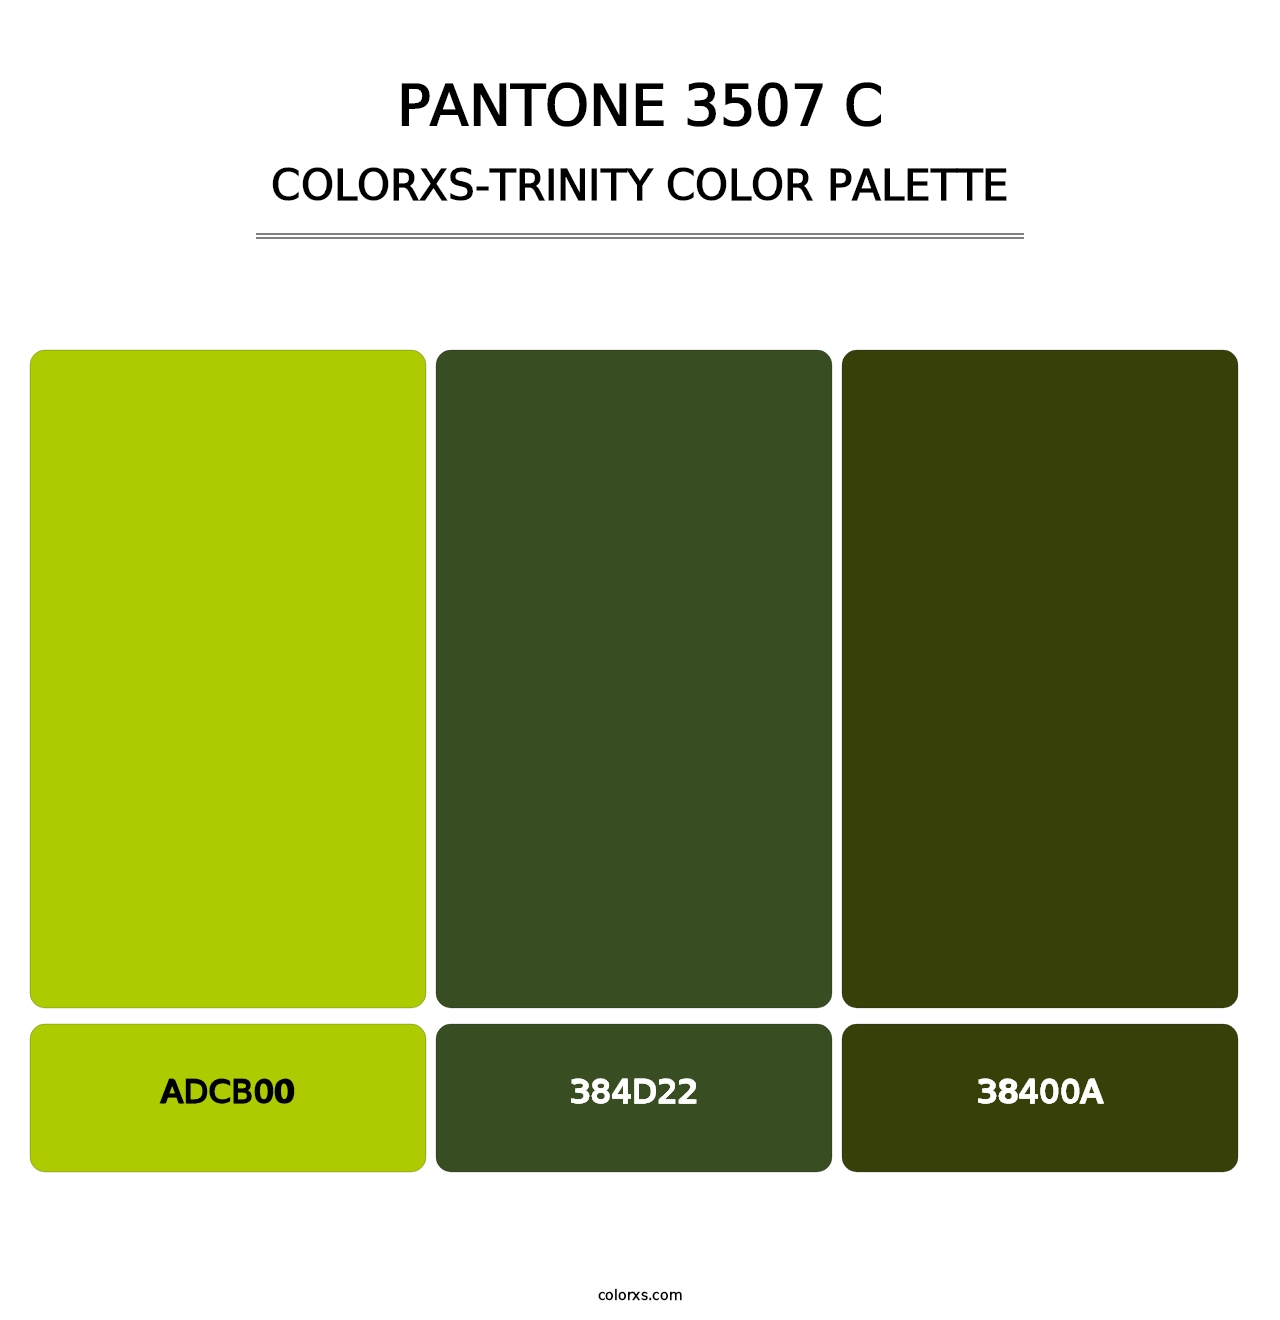 PANTONE 3507 C - Colorxs Trinity Palette